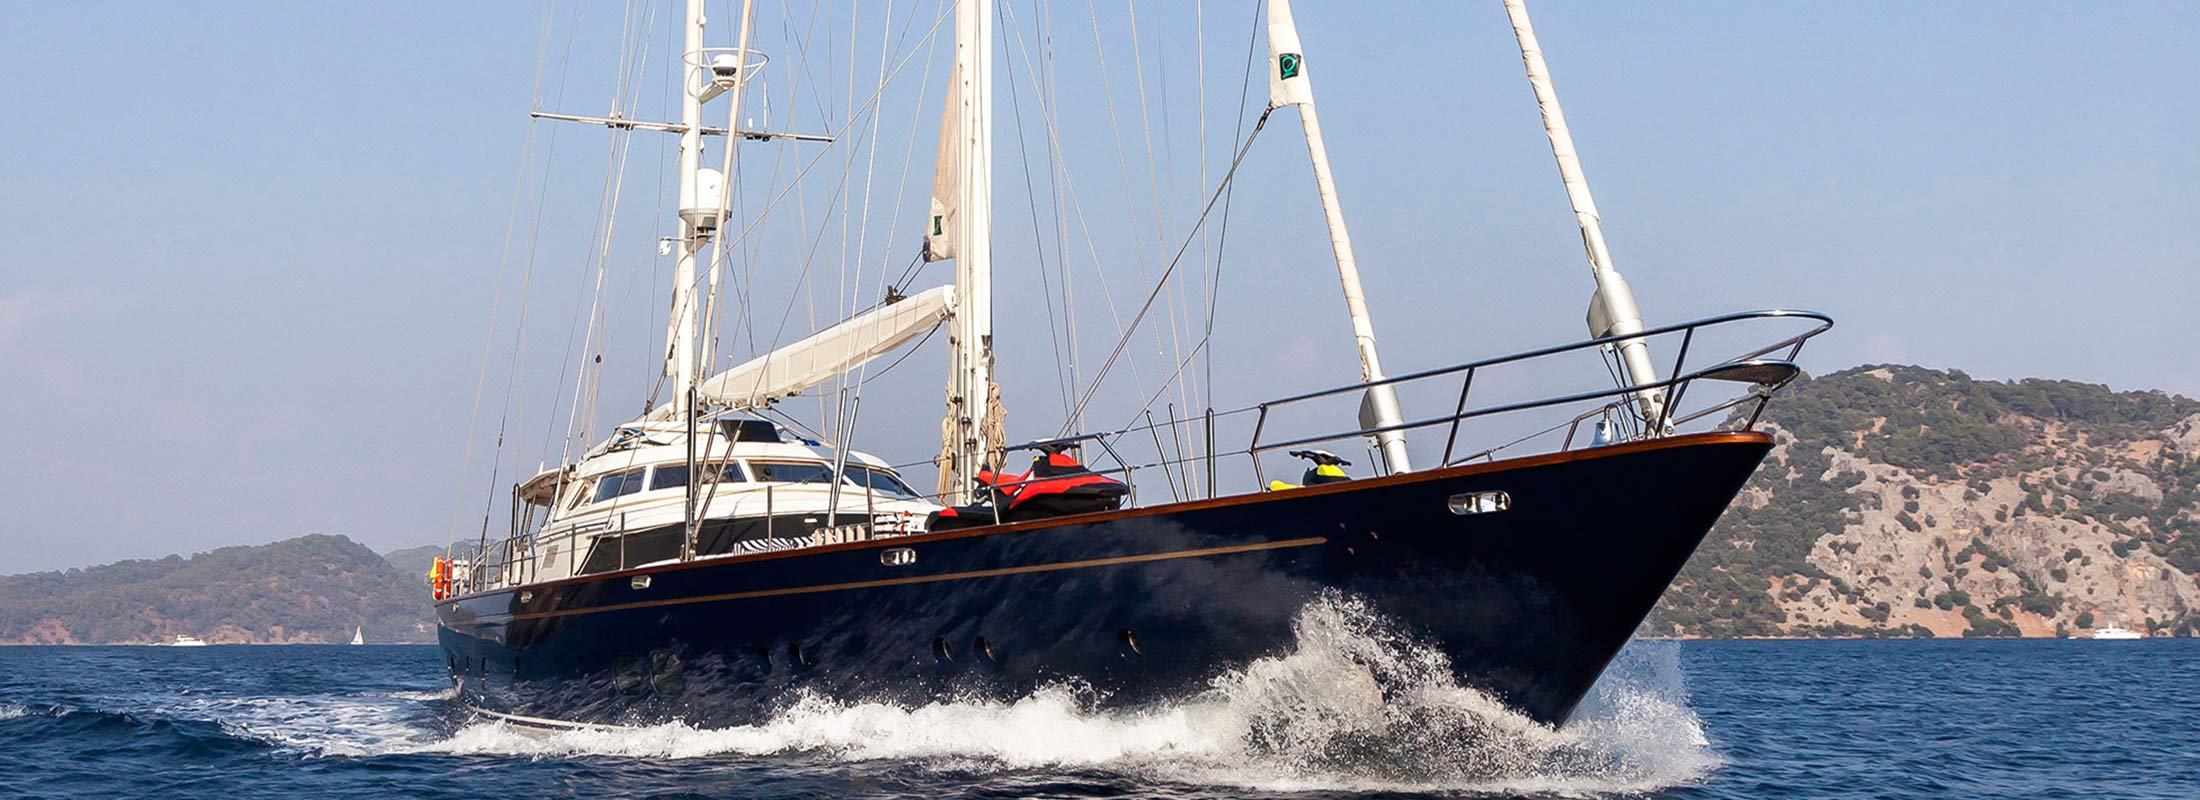 Khaleesi Sailing Yacht for Charter Mediterranean slider 1 